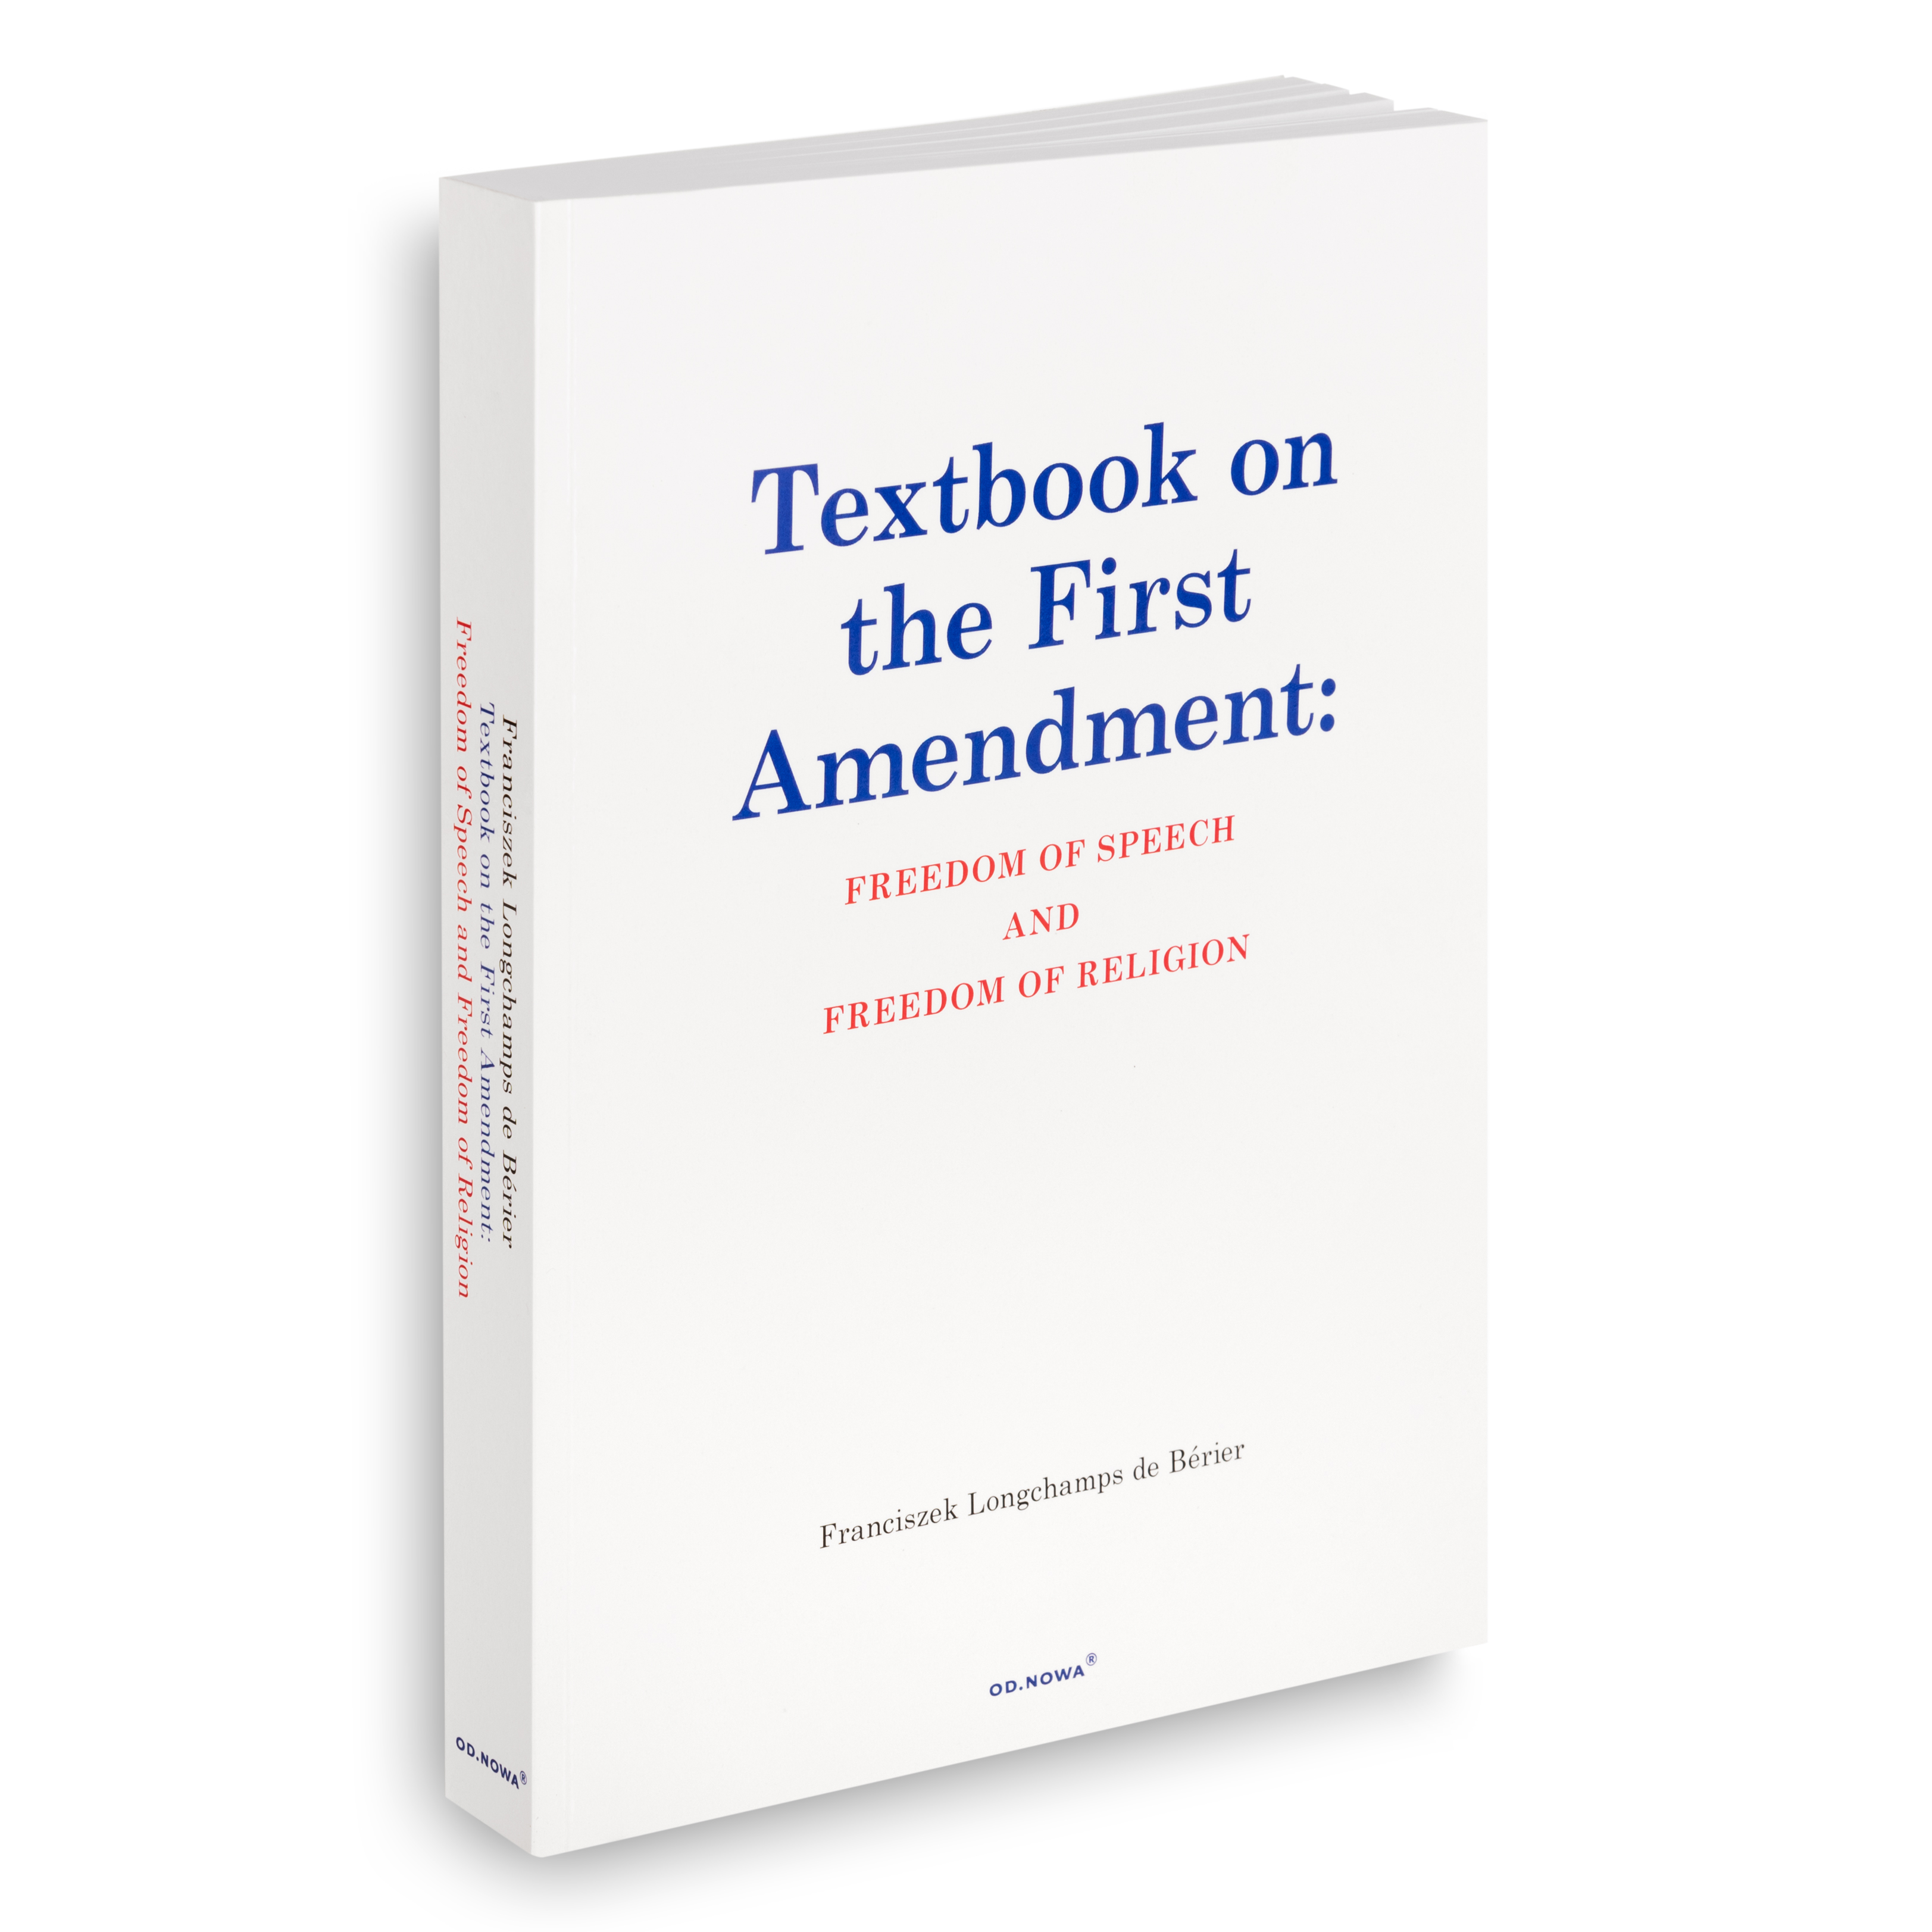 Textbook on the First Amendment